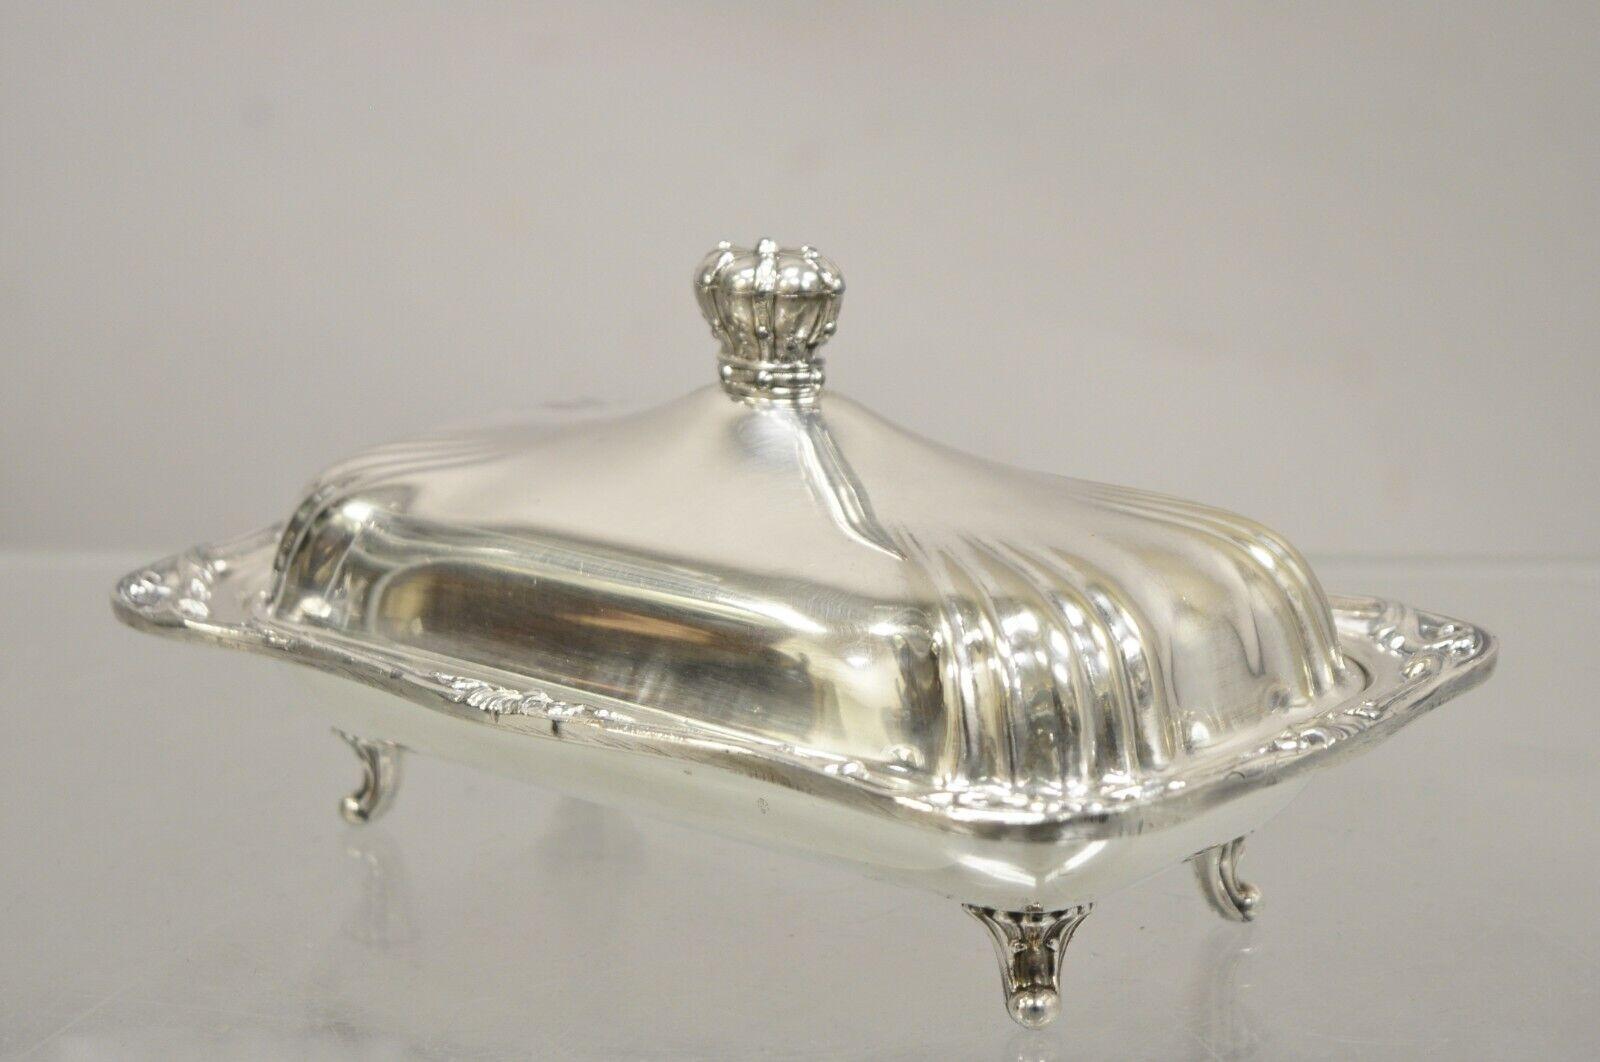 Vintage Coronet Silver Victorian Silver Plated Covered Butter Dish mit Royal Crown Handle. Circa Mitte des 20. Jahrhunderts. Abmessungen: 4